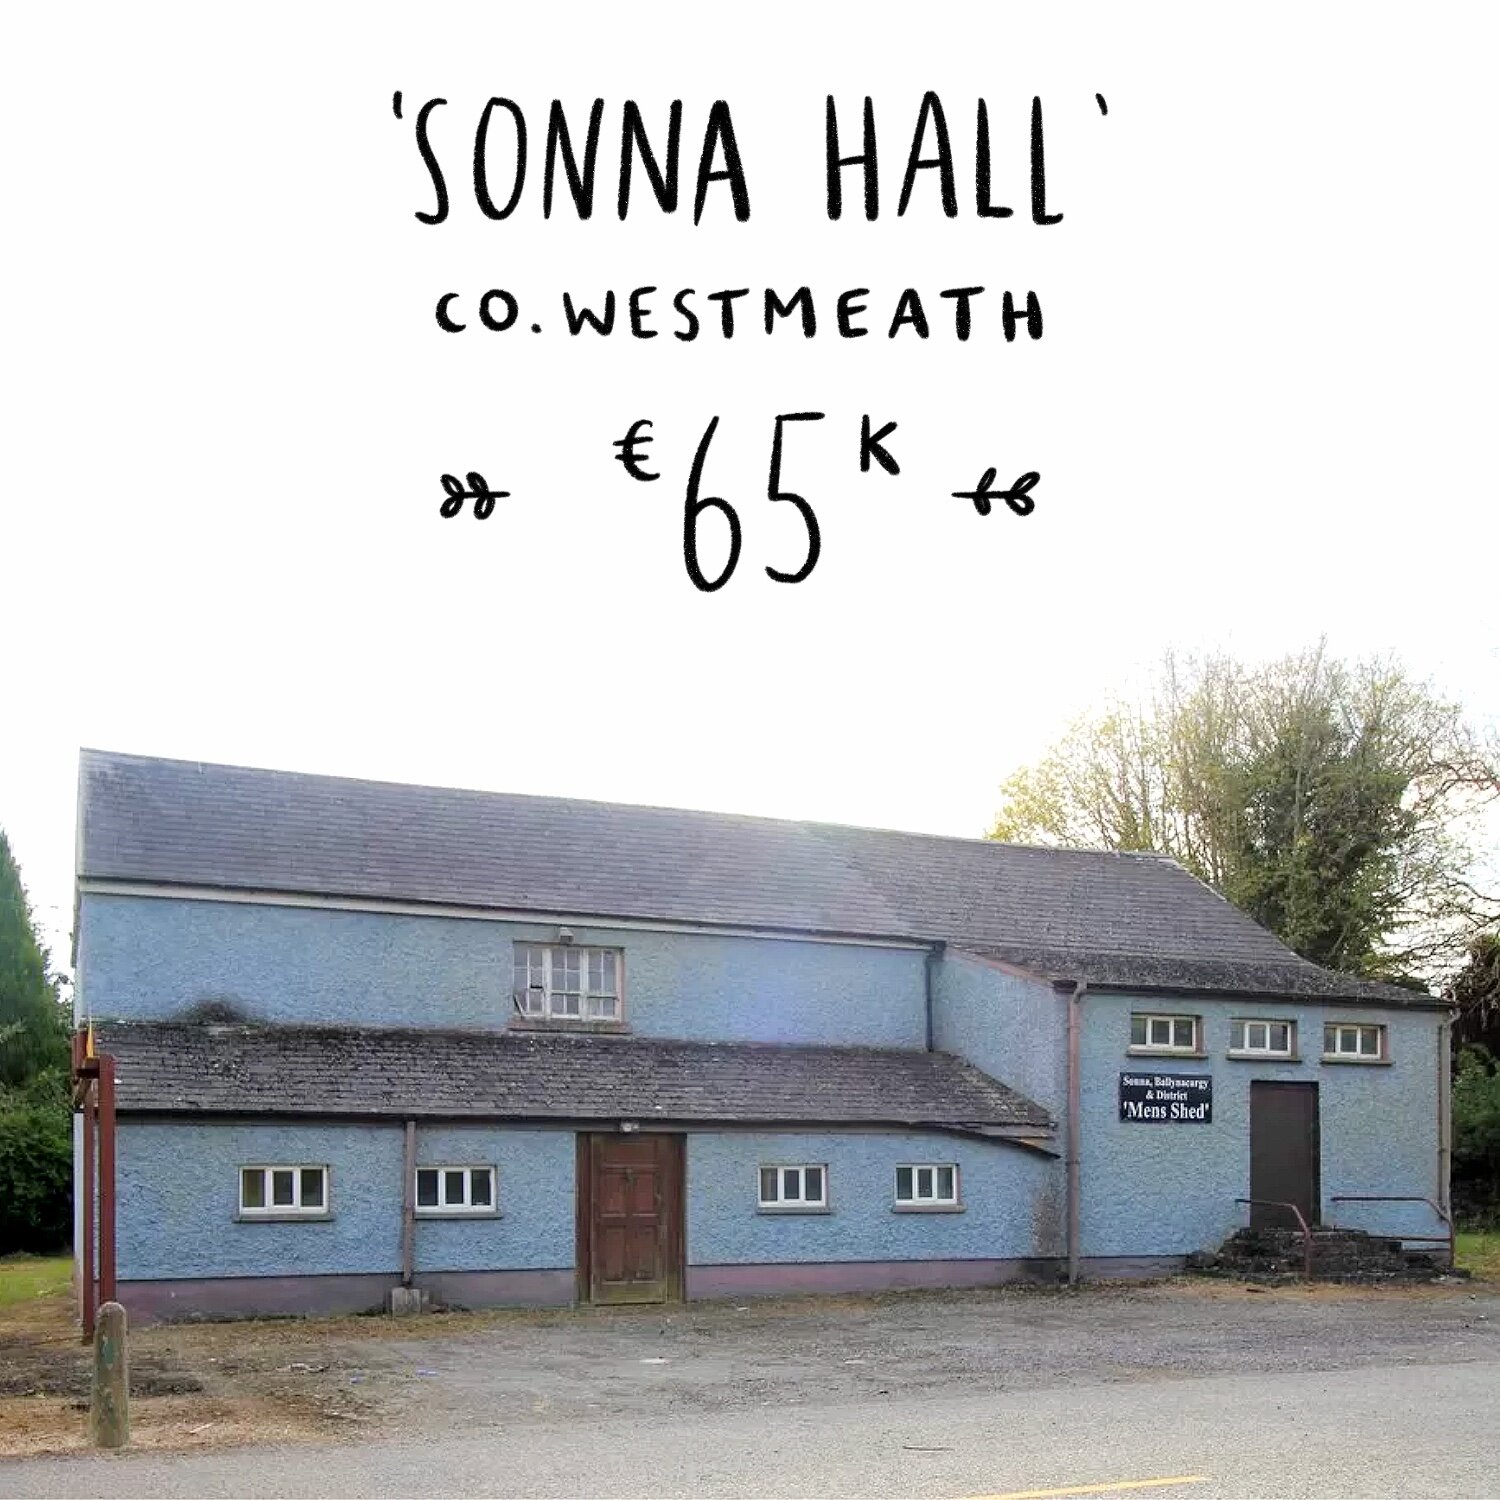 Sonna Hall, Mullingar, Co. Westmeath. €65k